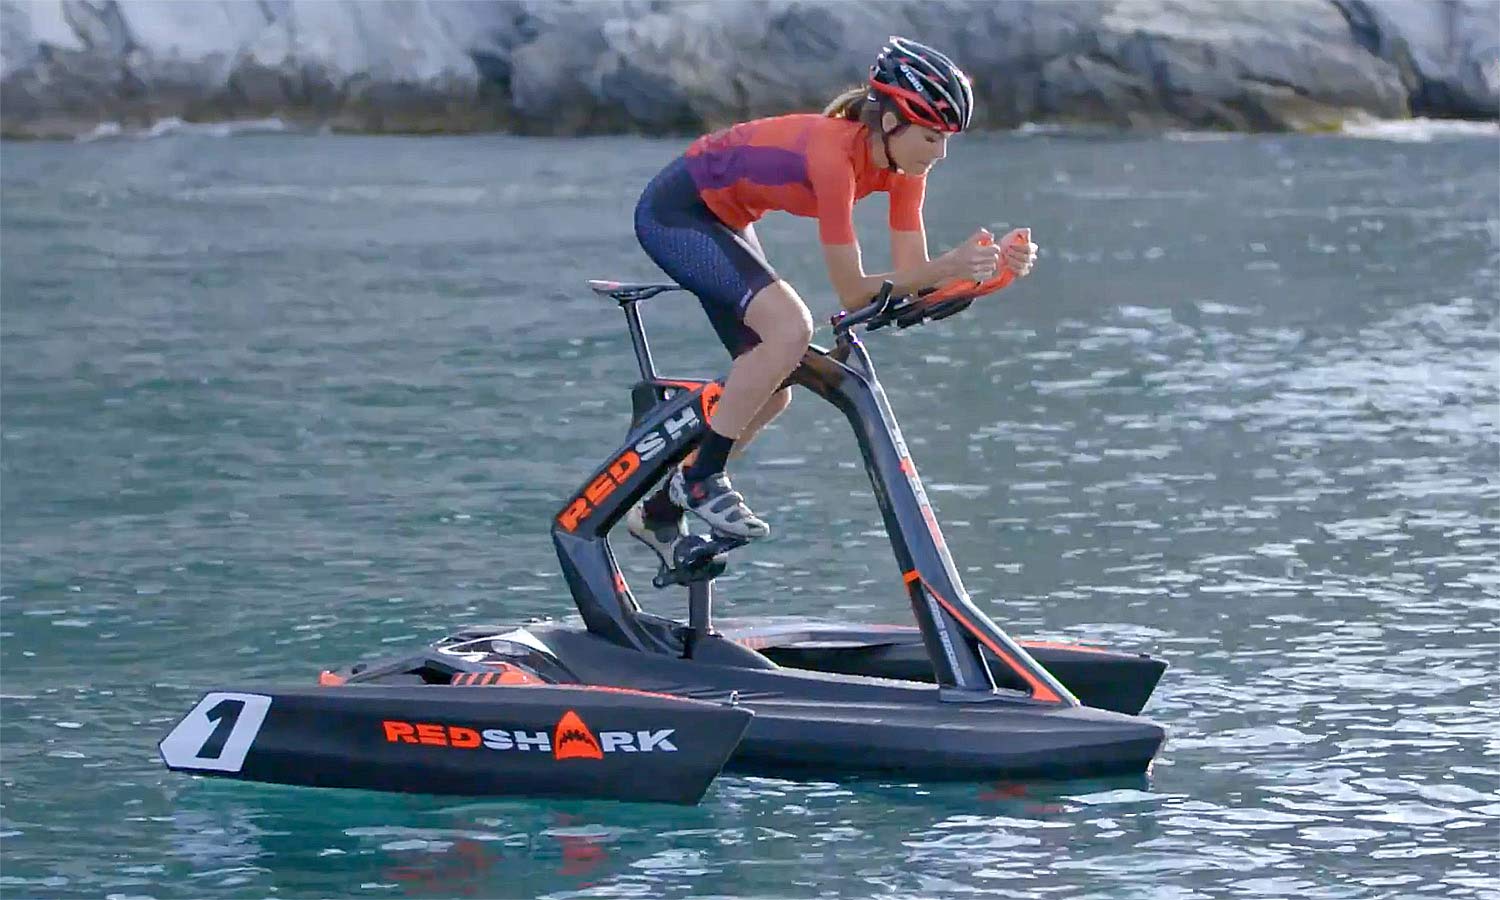 RedShark bikes go training or bikepacking by sea as trimaran, pedal-powered boat